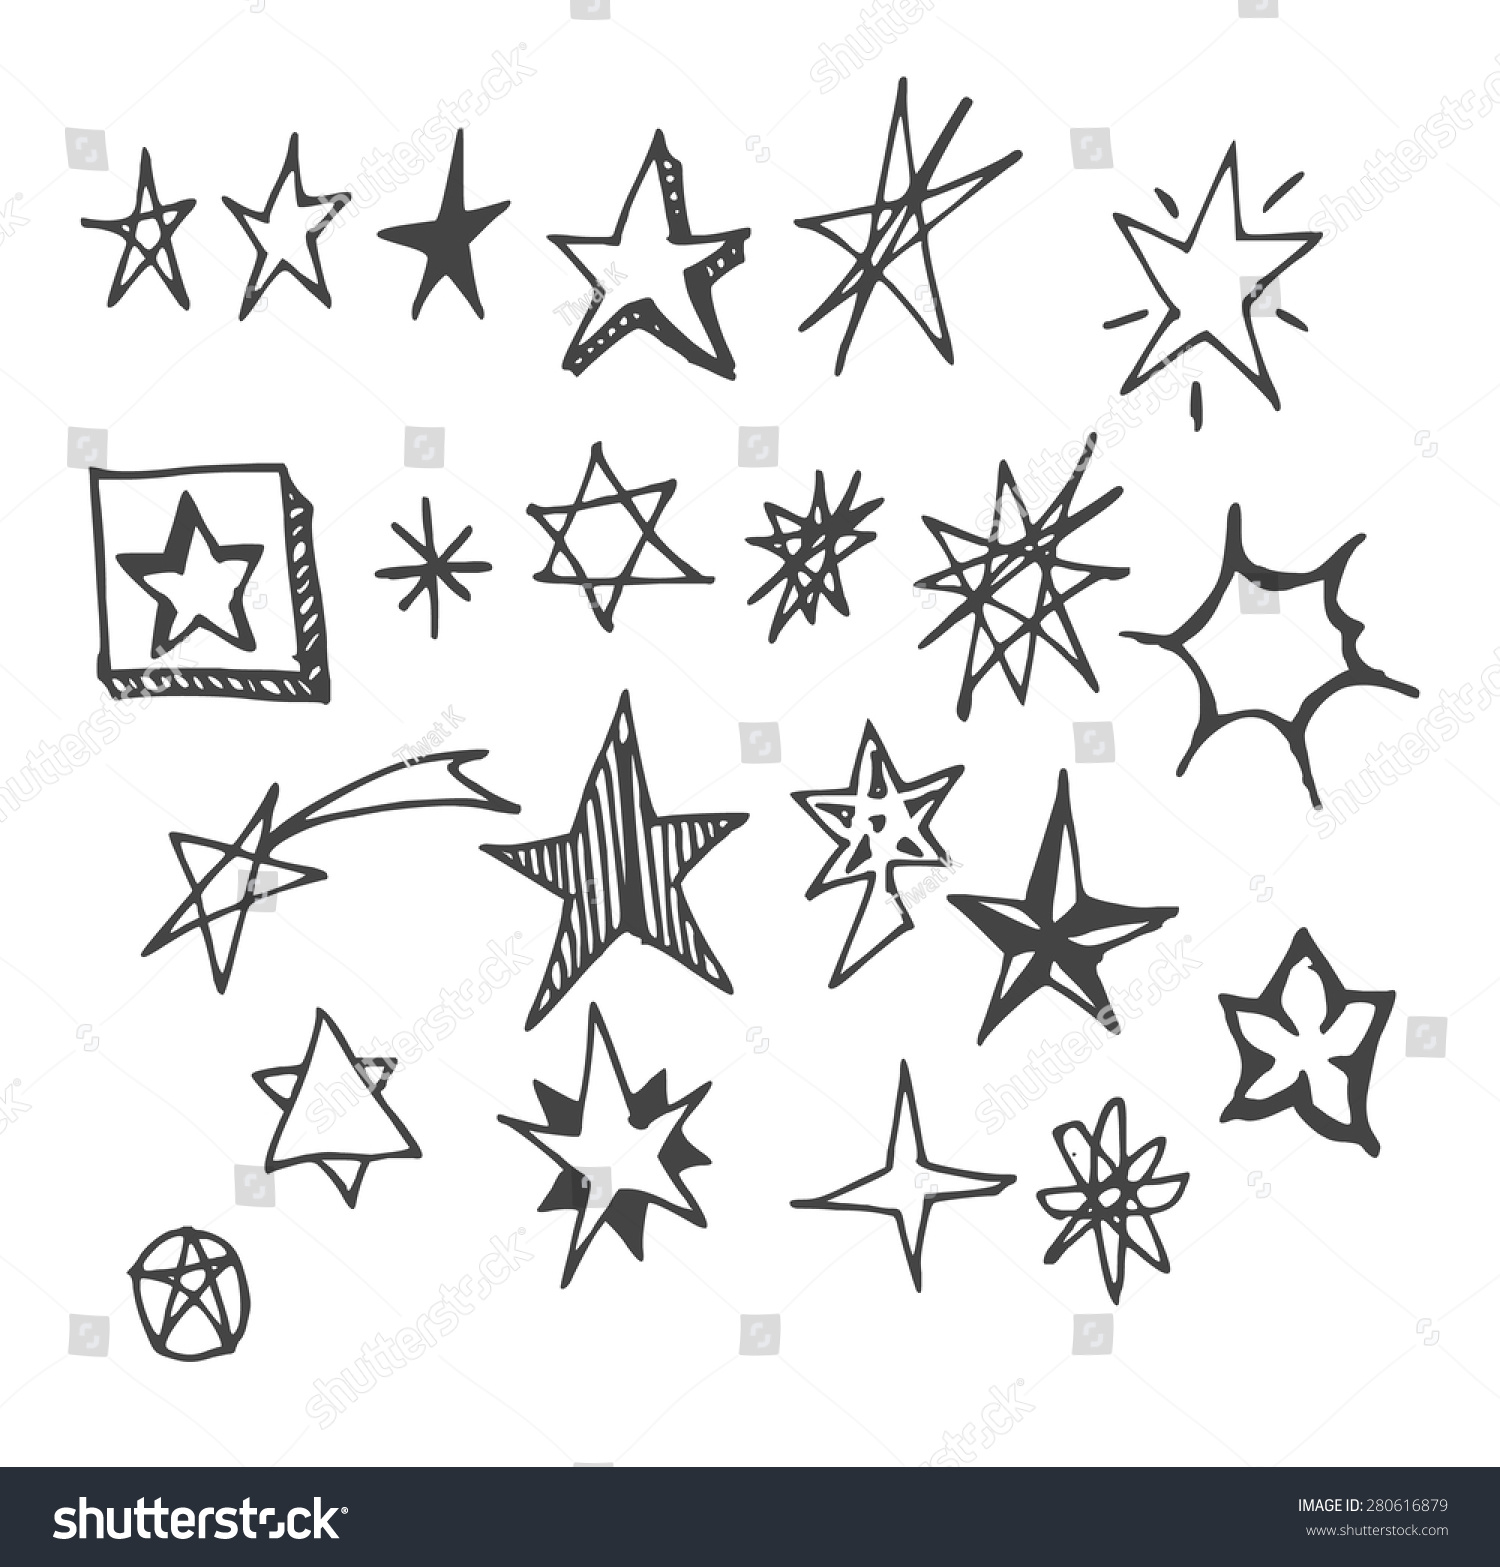 Star Doodles Hand Drawn Vector Illustration Stock Vector 280616879 ...